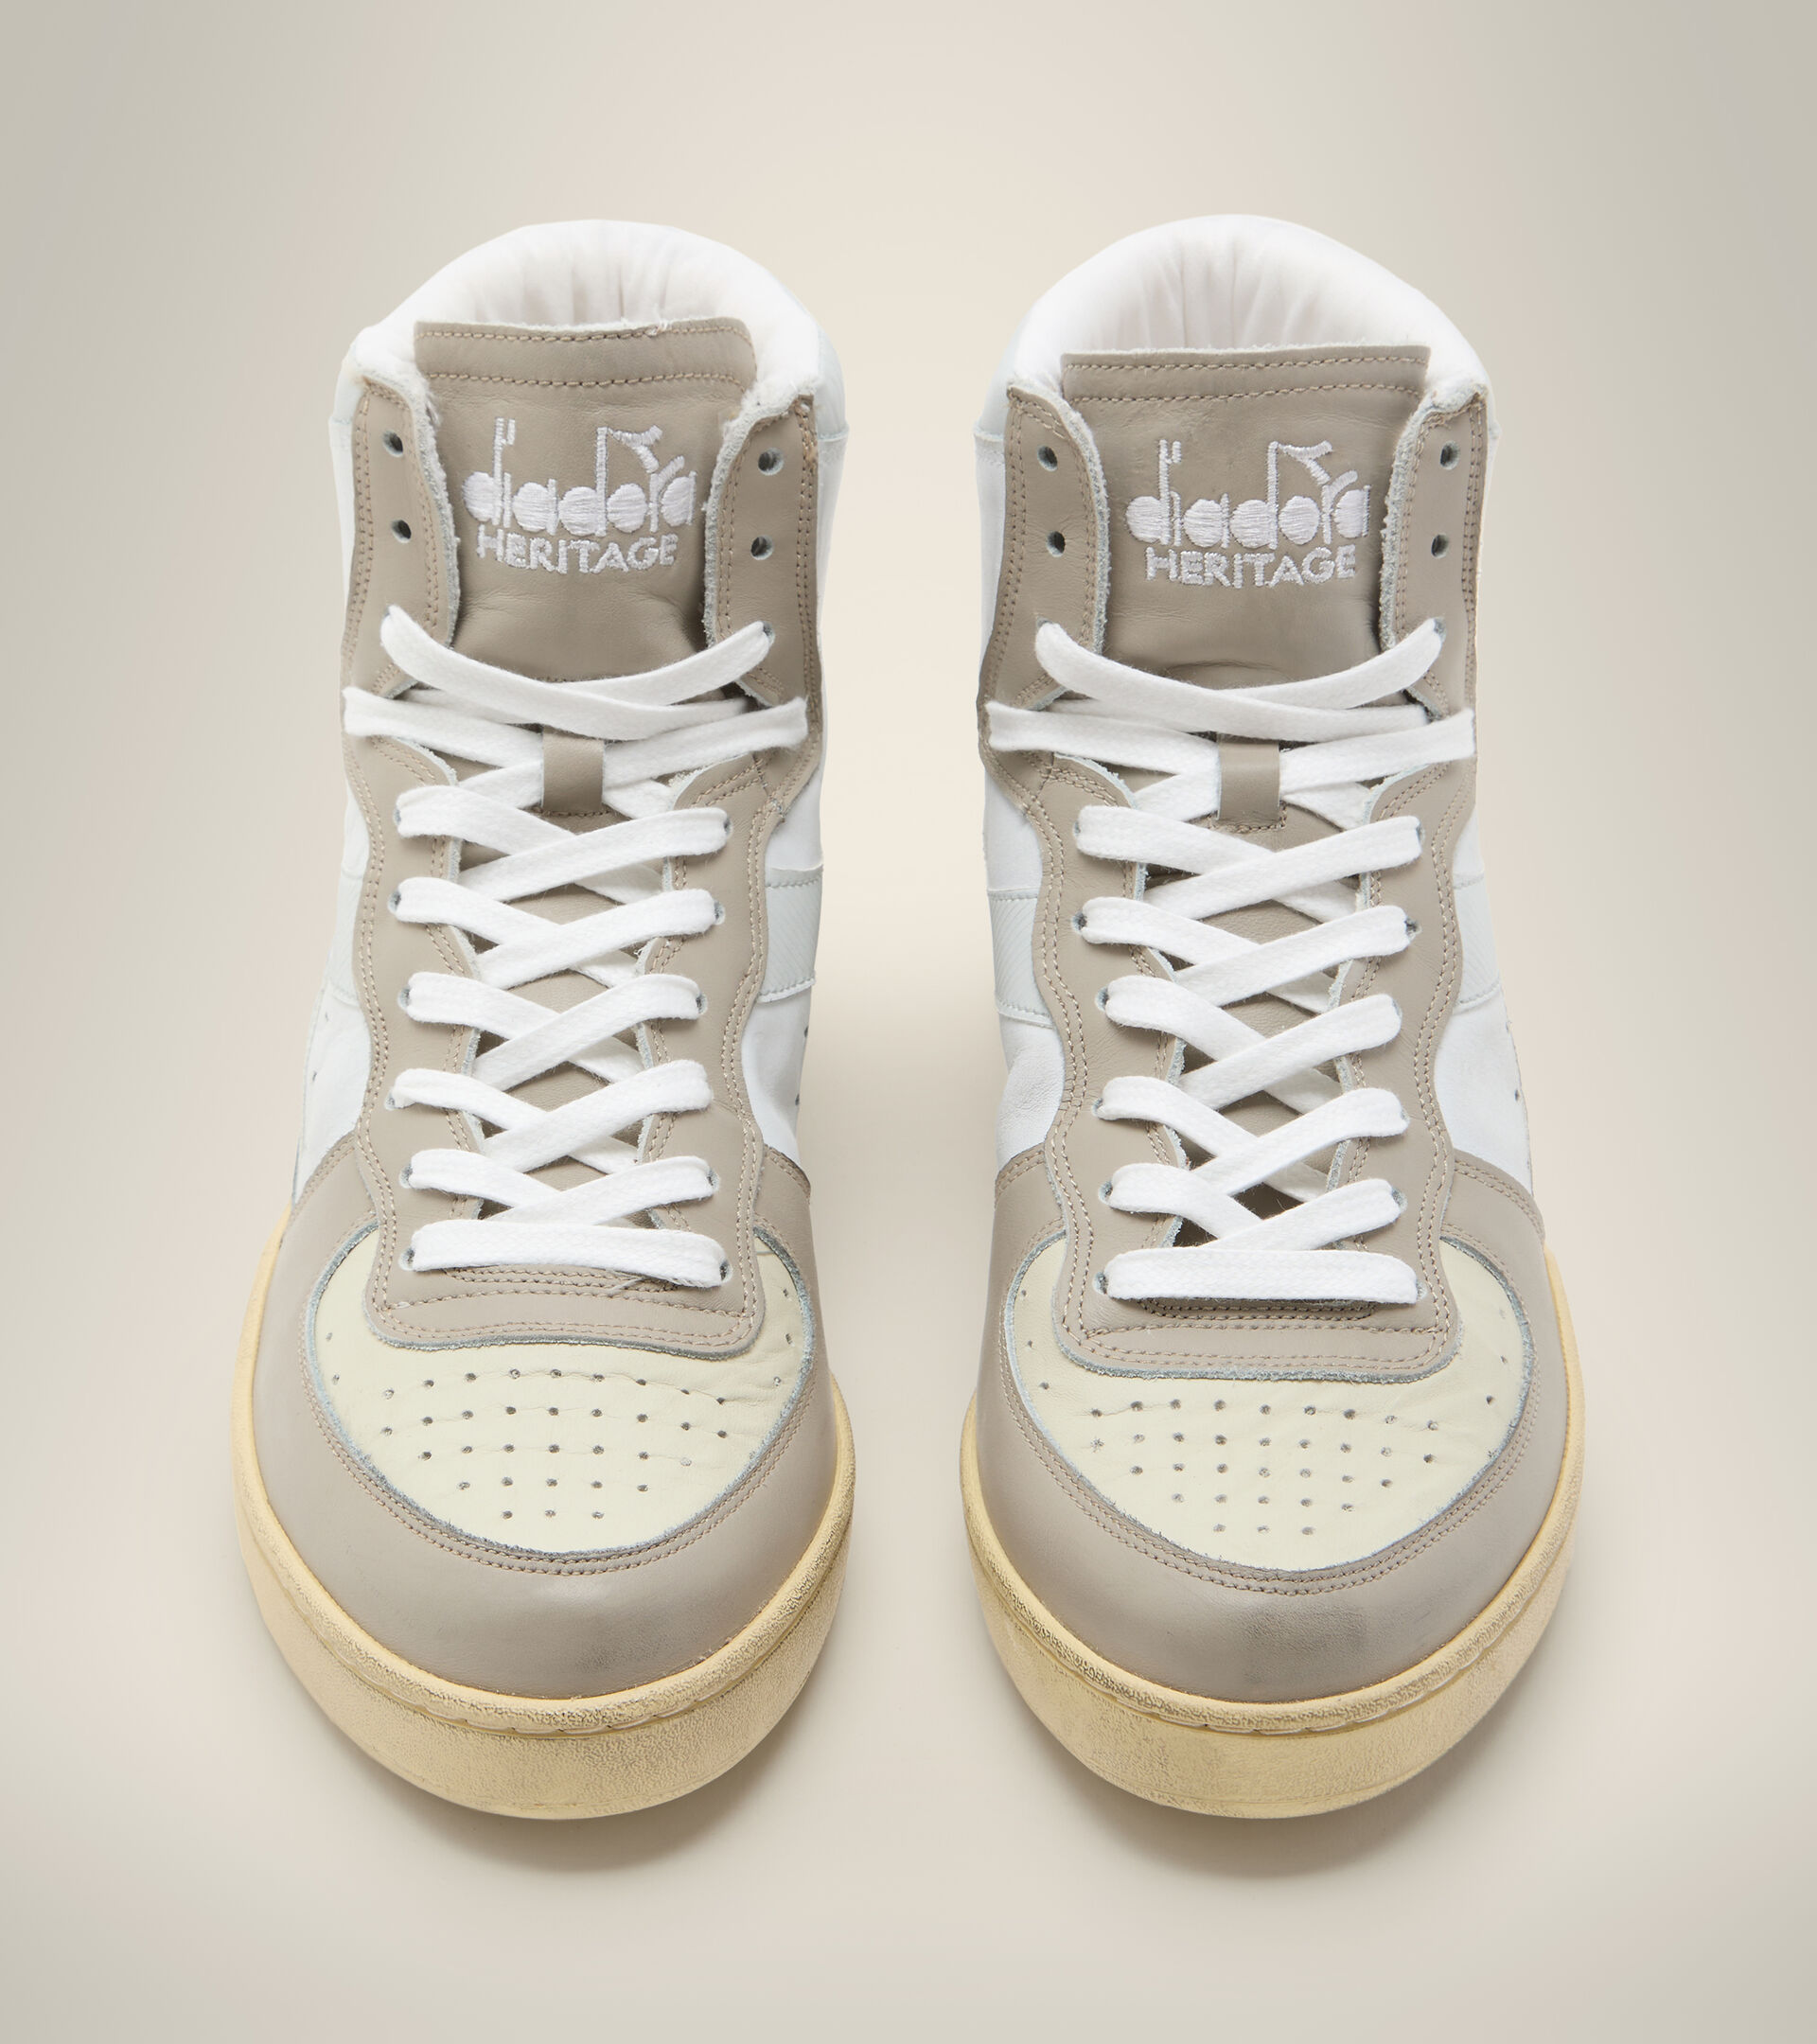 Heritage shoes - Unisex MI BASKET USED WHITE/COBBLESTONE - Diadora